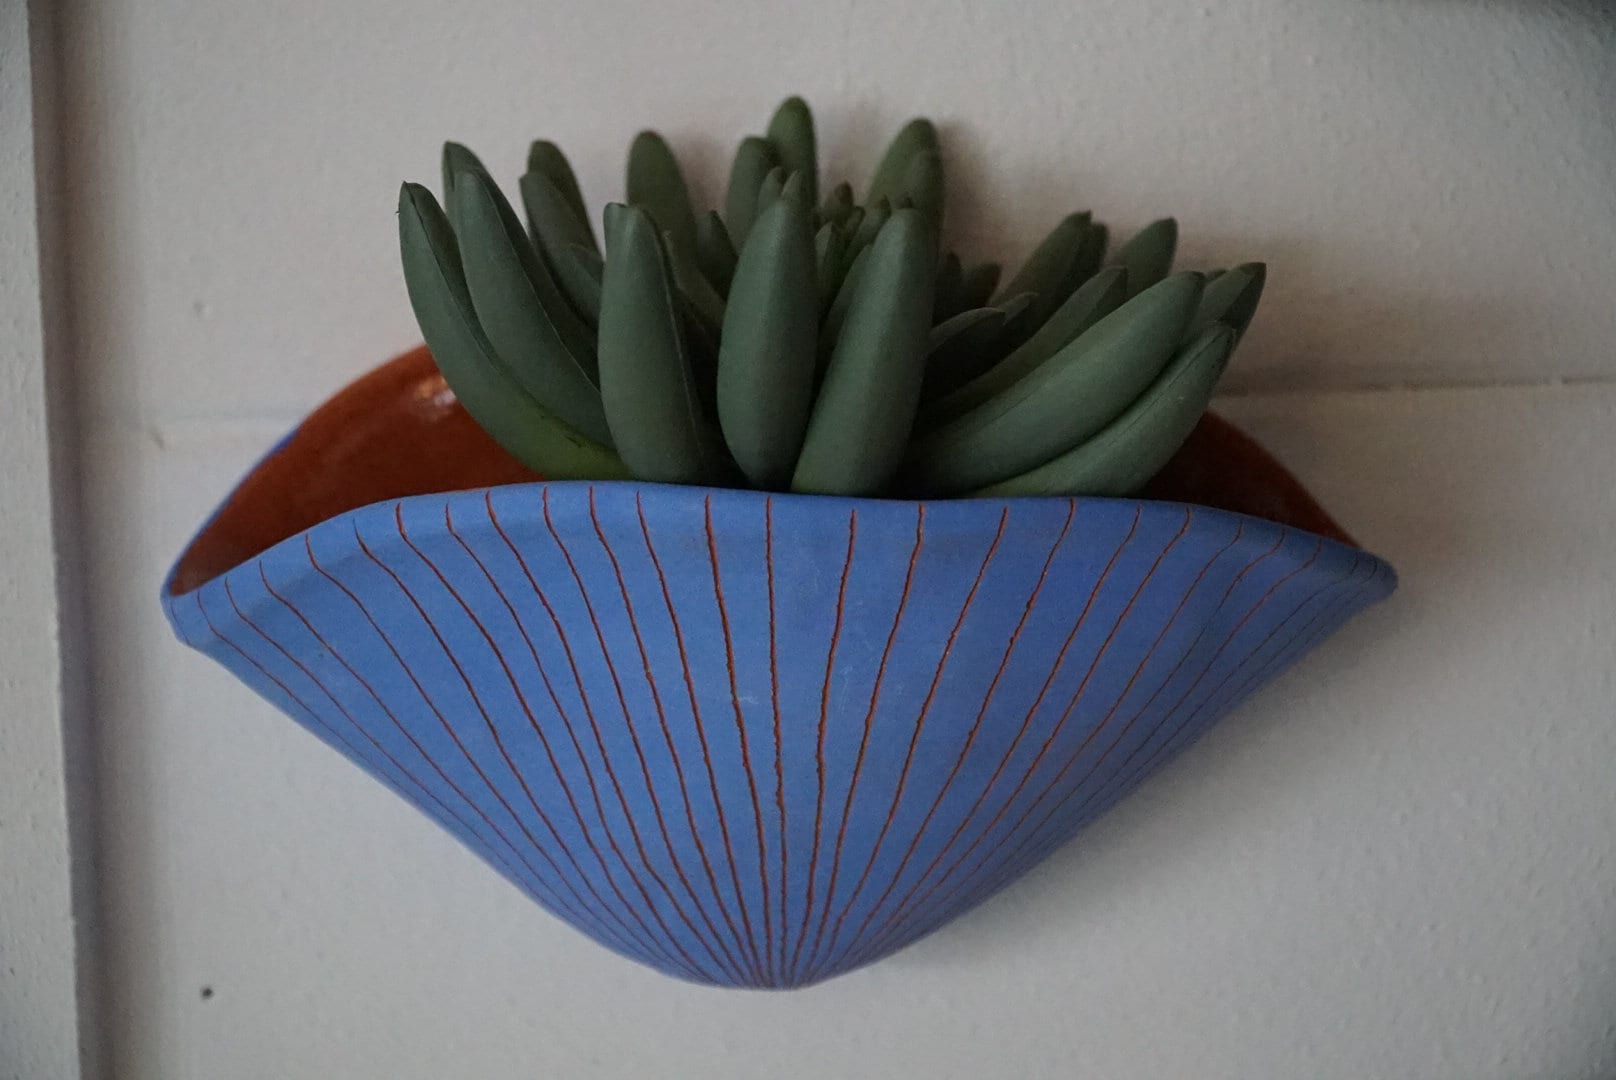 Blue & Terracotta Wall Pocket Planter w/ "Vertical Line" Design - Ceramic Wall Planter - Pottery - Succulent - Houseplant - Planter